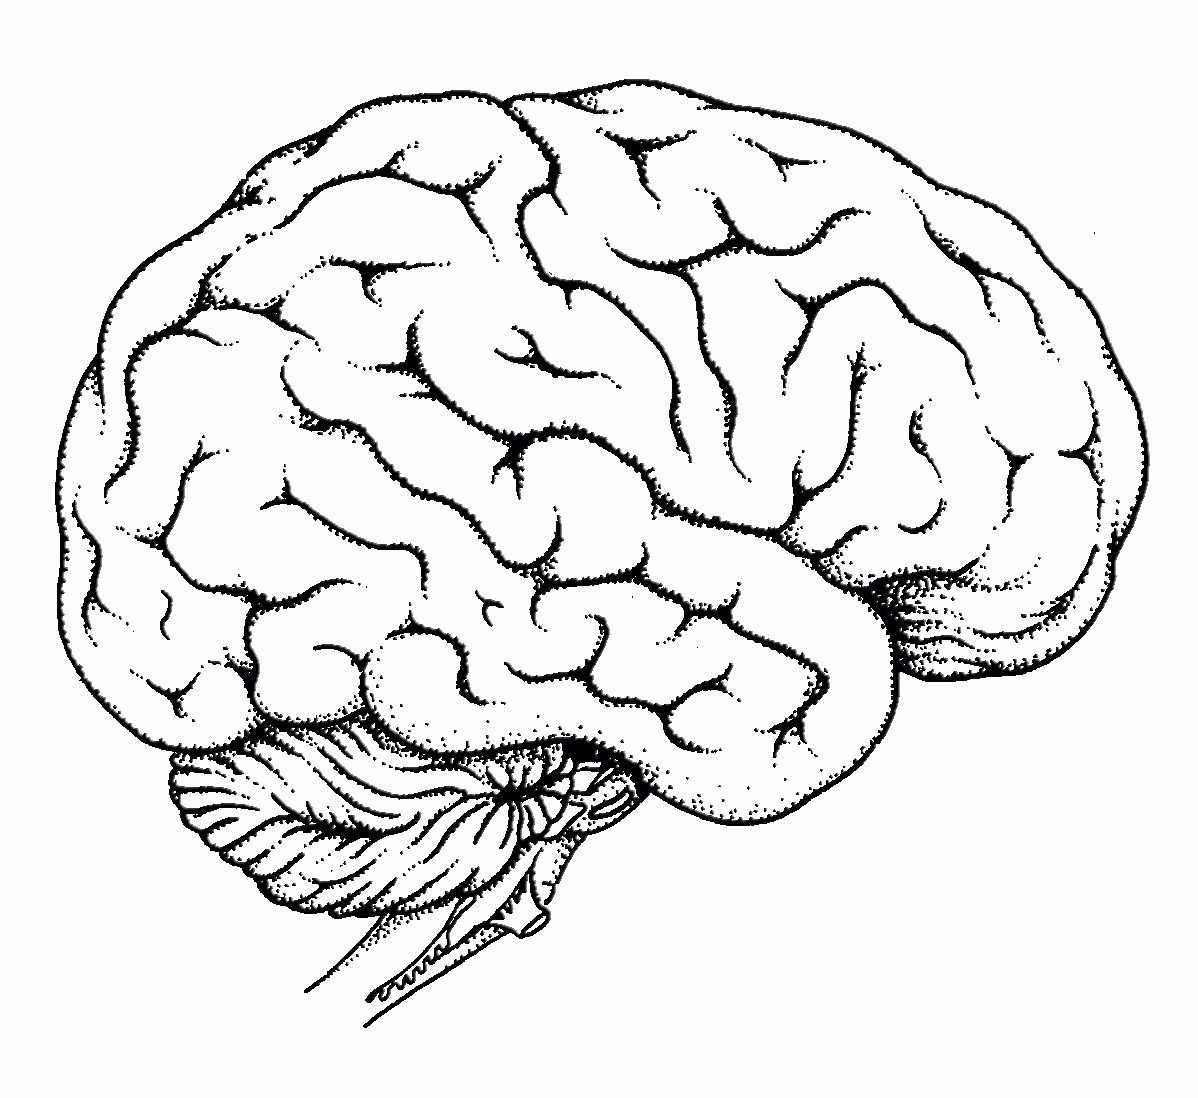 Brain pdf. Мозг сбоку. Мозг нарисованный. Мозг рисунок. Мозг трафарет.